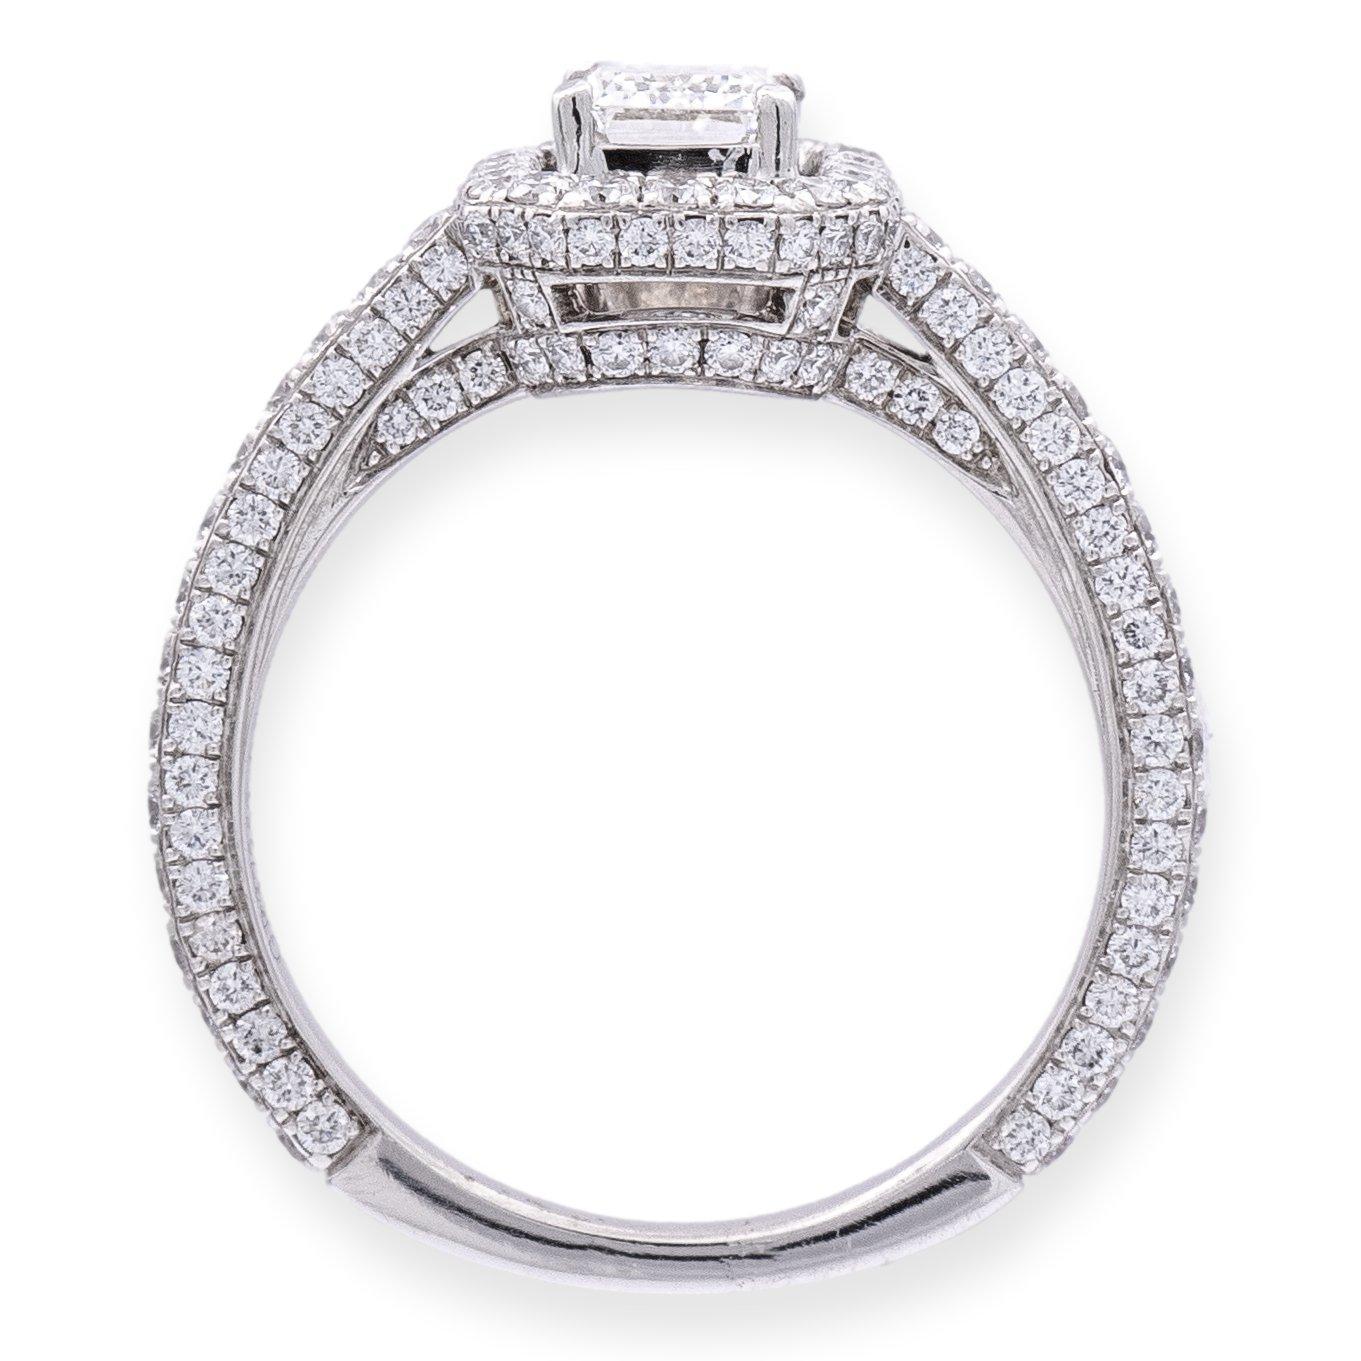 GRAFF 18K White Gold GIA Emerald Cut Diamond Engagement Ring  1.85 cts. TW F VS1 2